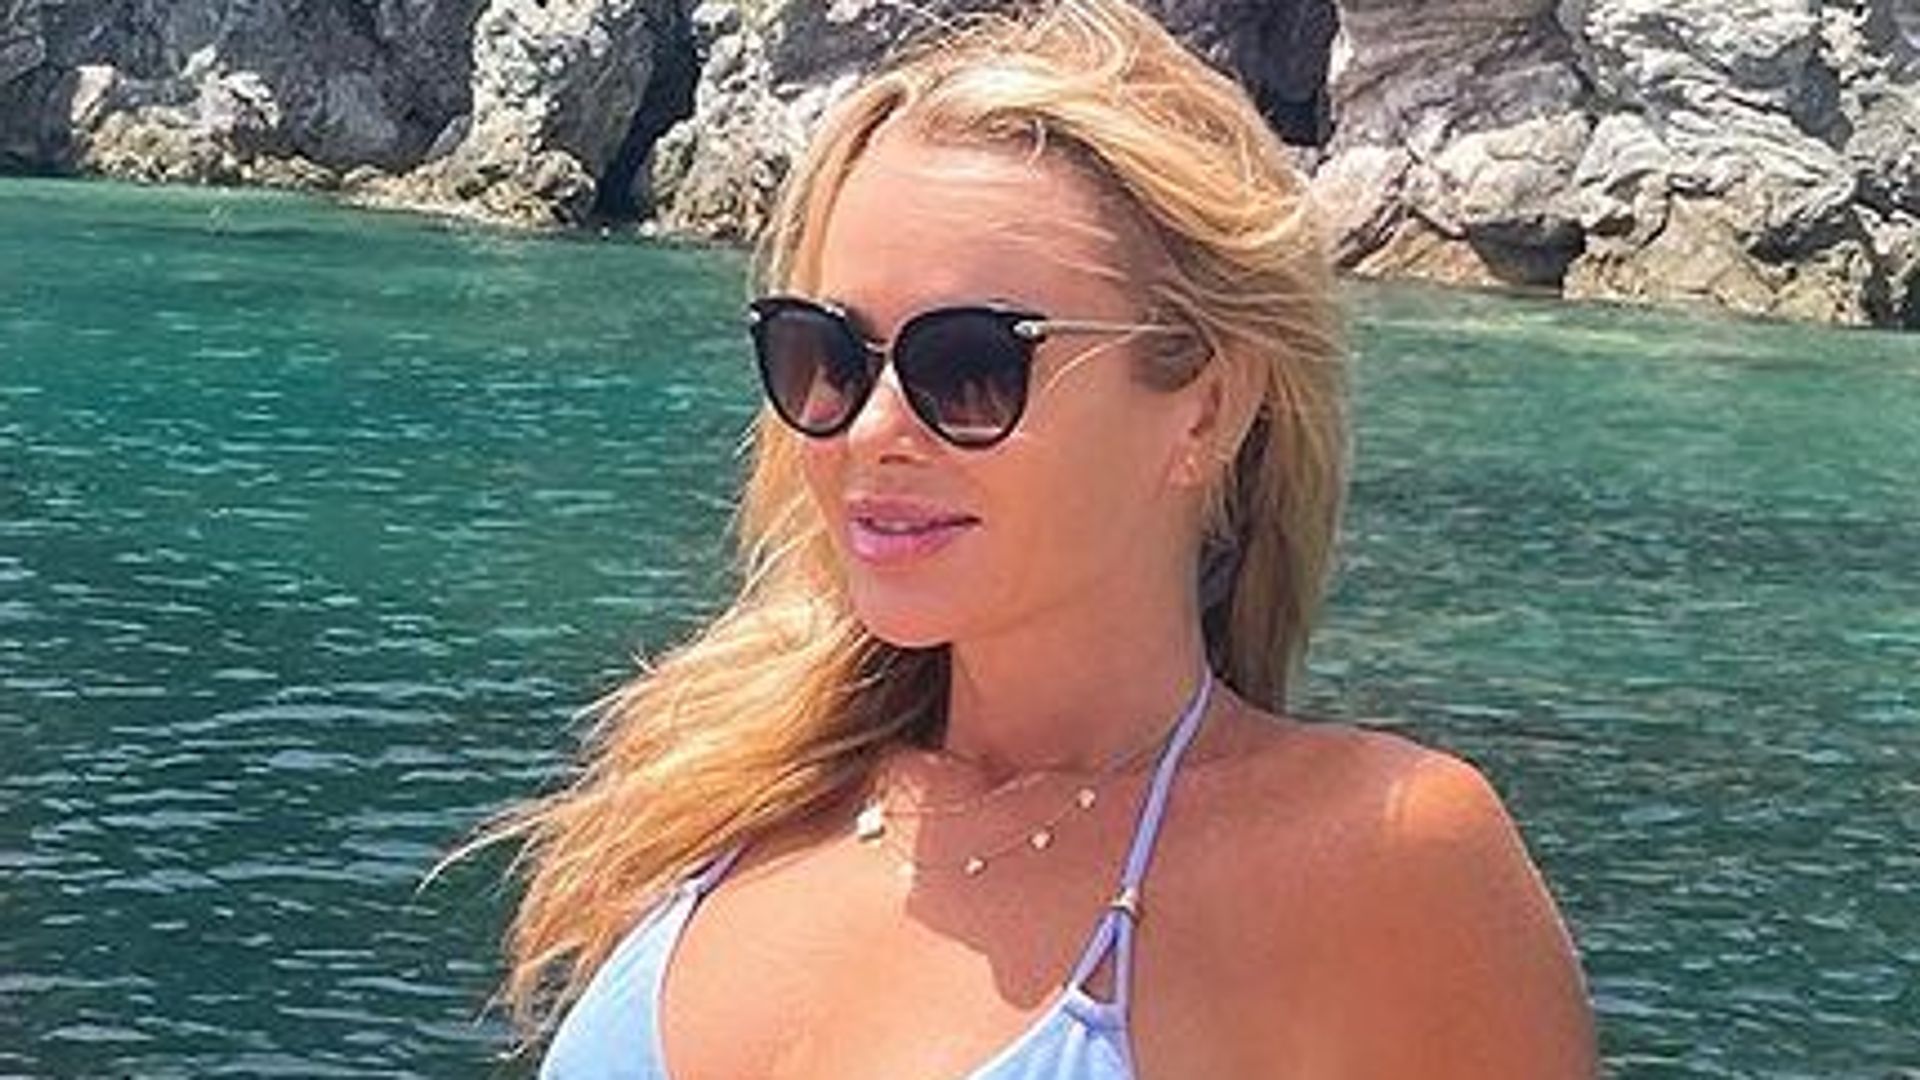 Amanda Holden wearing blue bikini and sunglasses sitting on boat